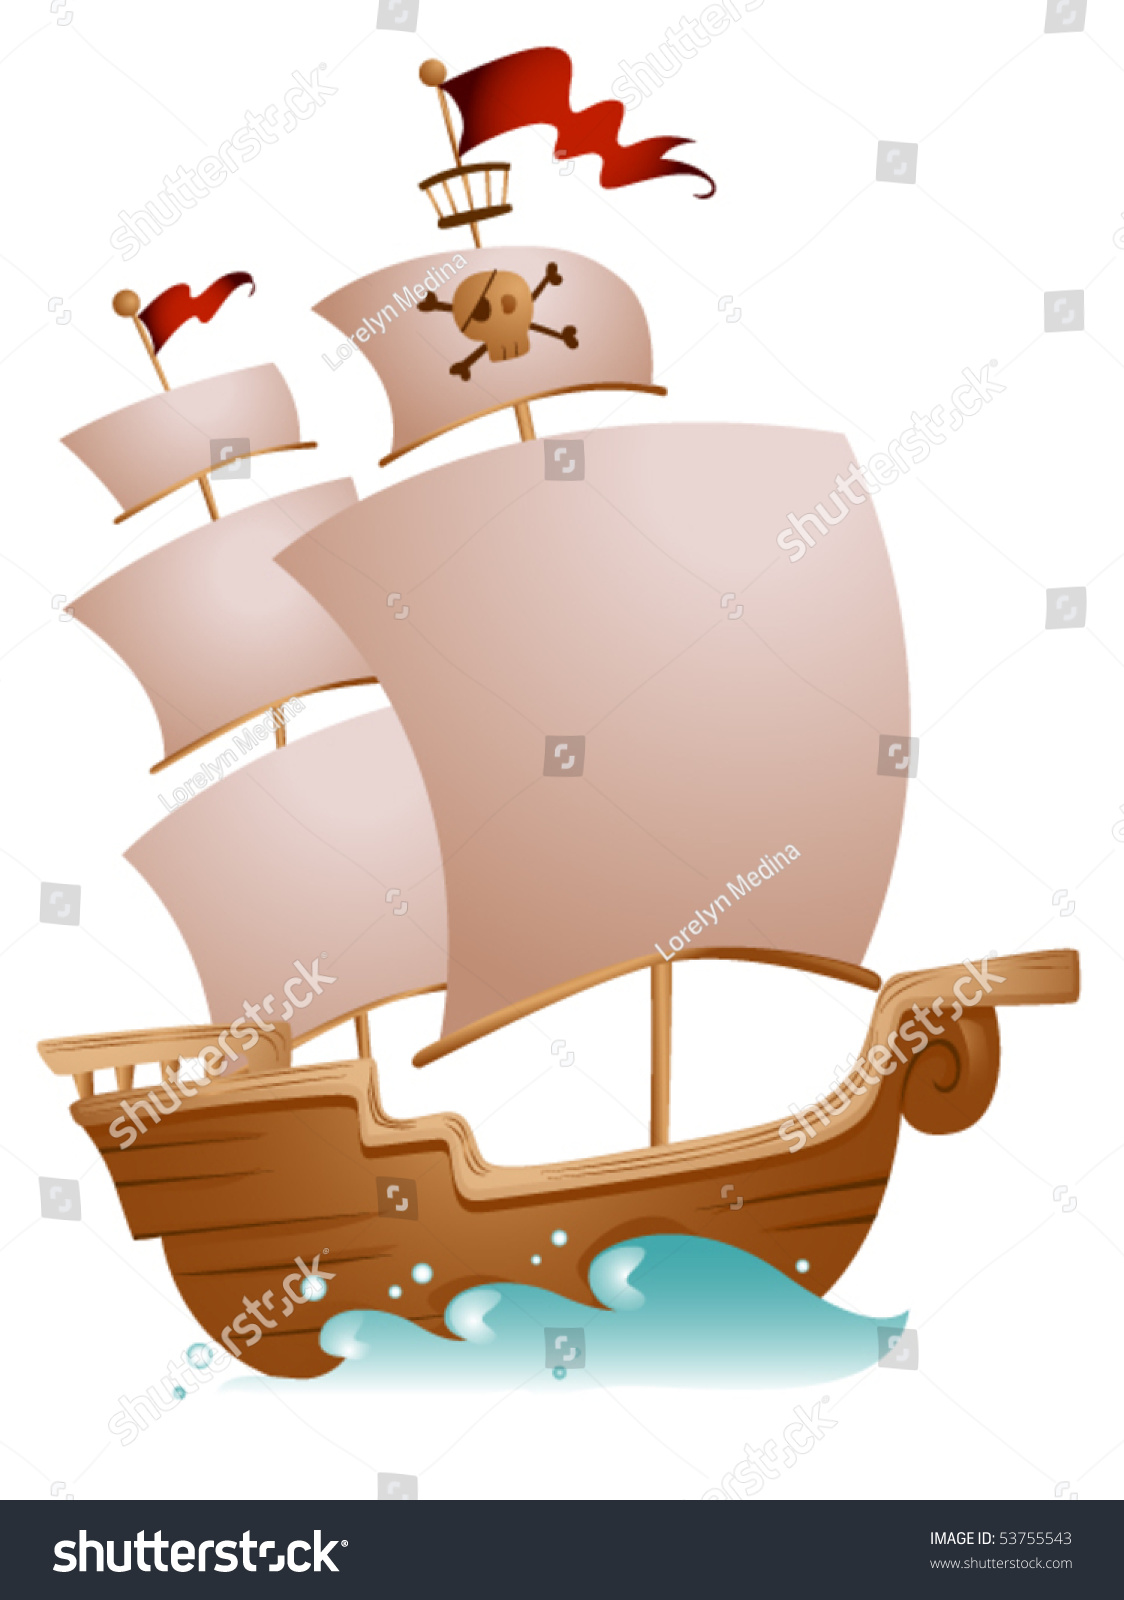 Pirate Ship - Vector - 53755543 : Shutterstock